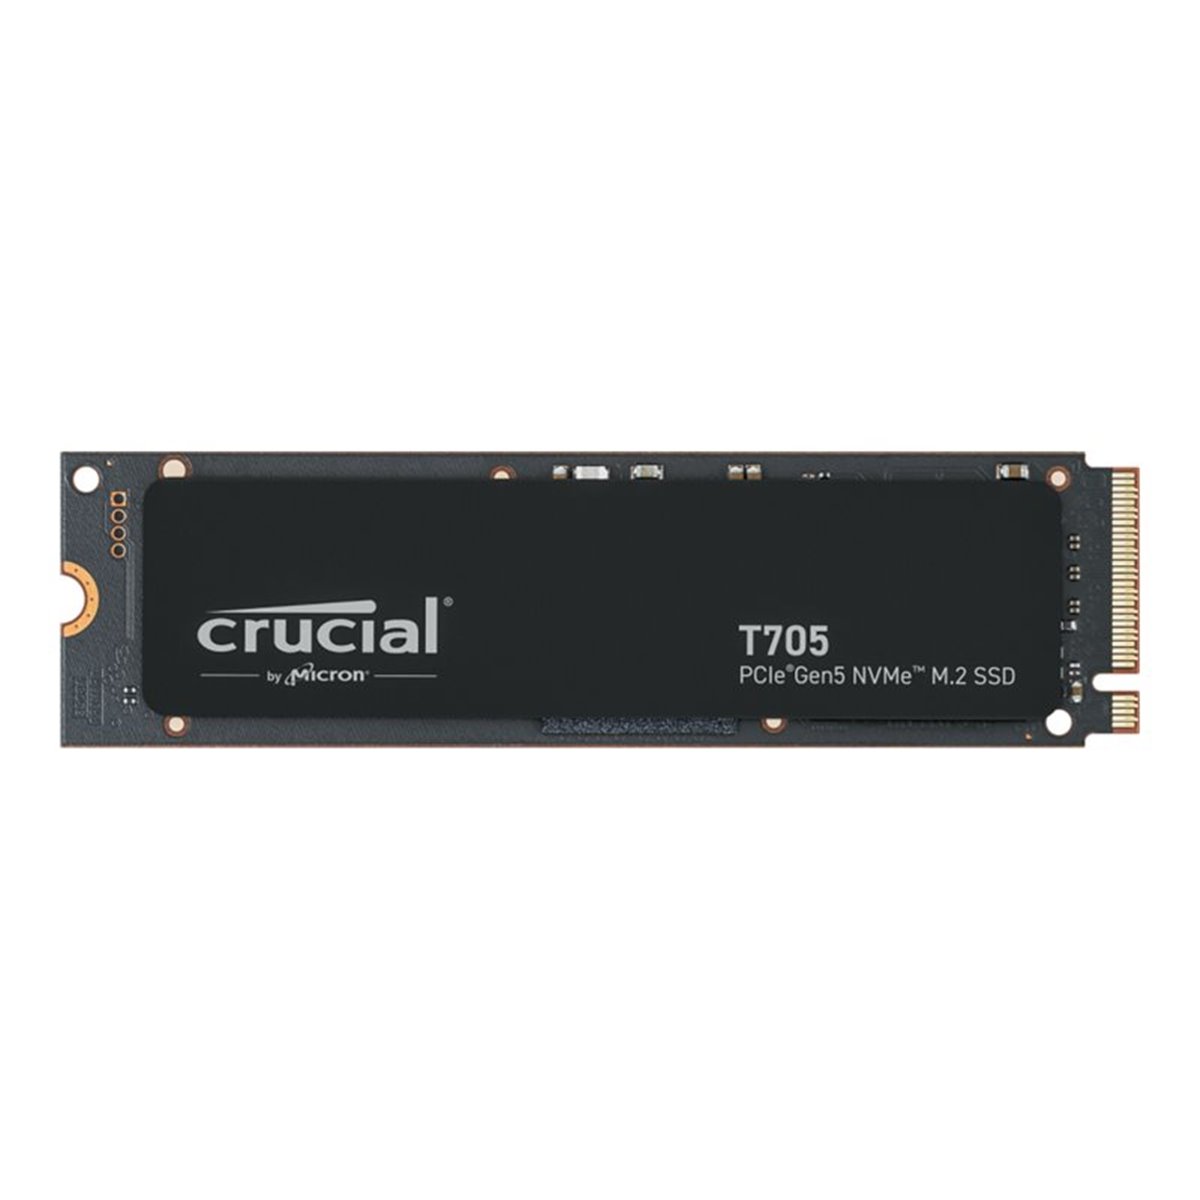 Micron Crucial T705                 4TB PCIe Gen5 NVMe M.2 SSD